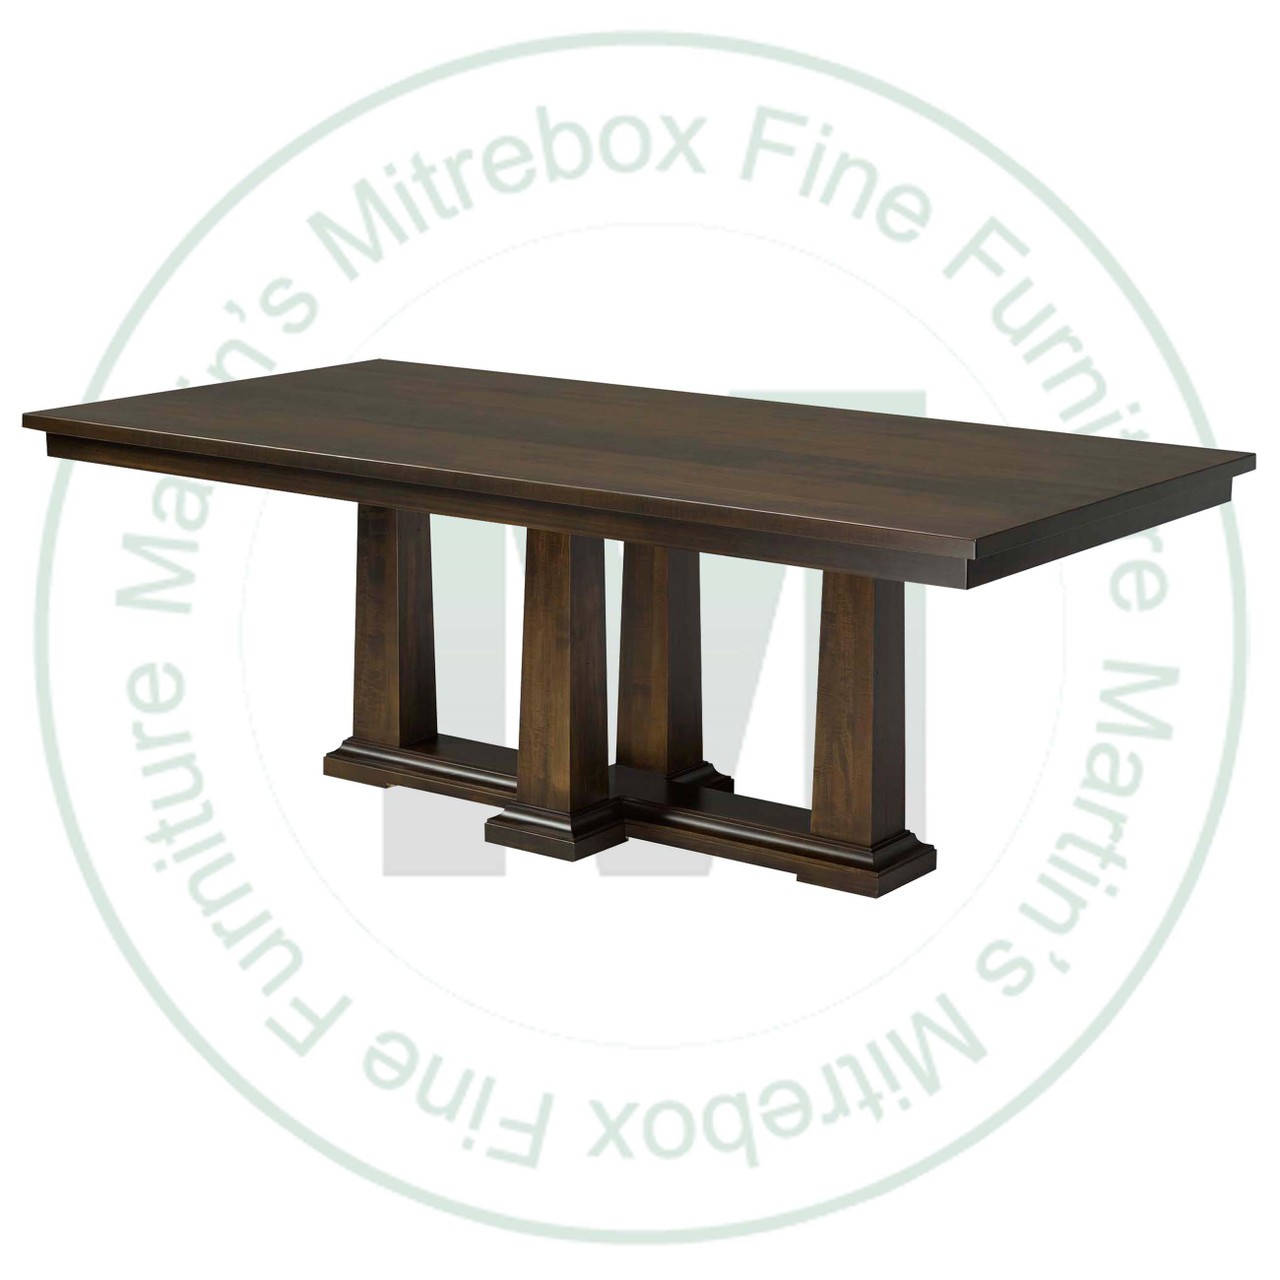 Oak Parthenon Double Pedestal Table 42''D x 96''W x 30''H Solid Top Table Has 1.75'' Thick Top